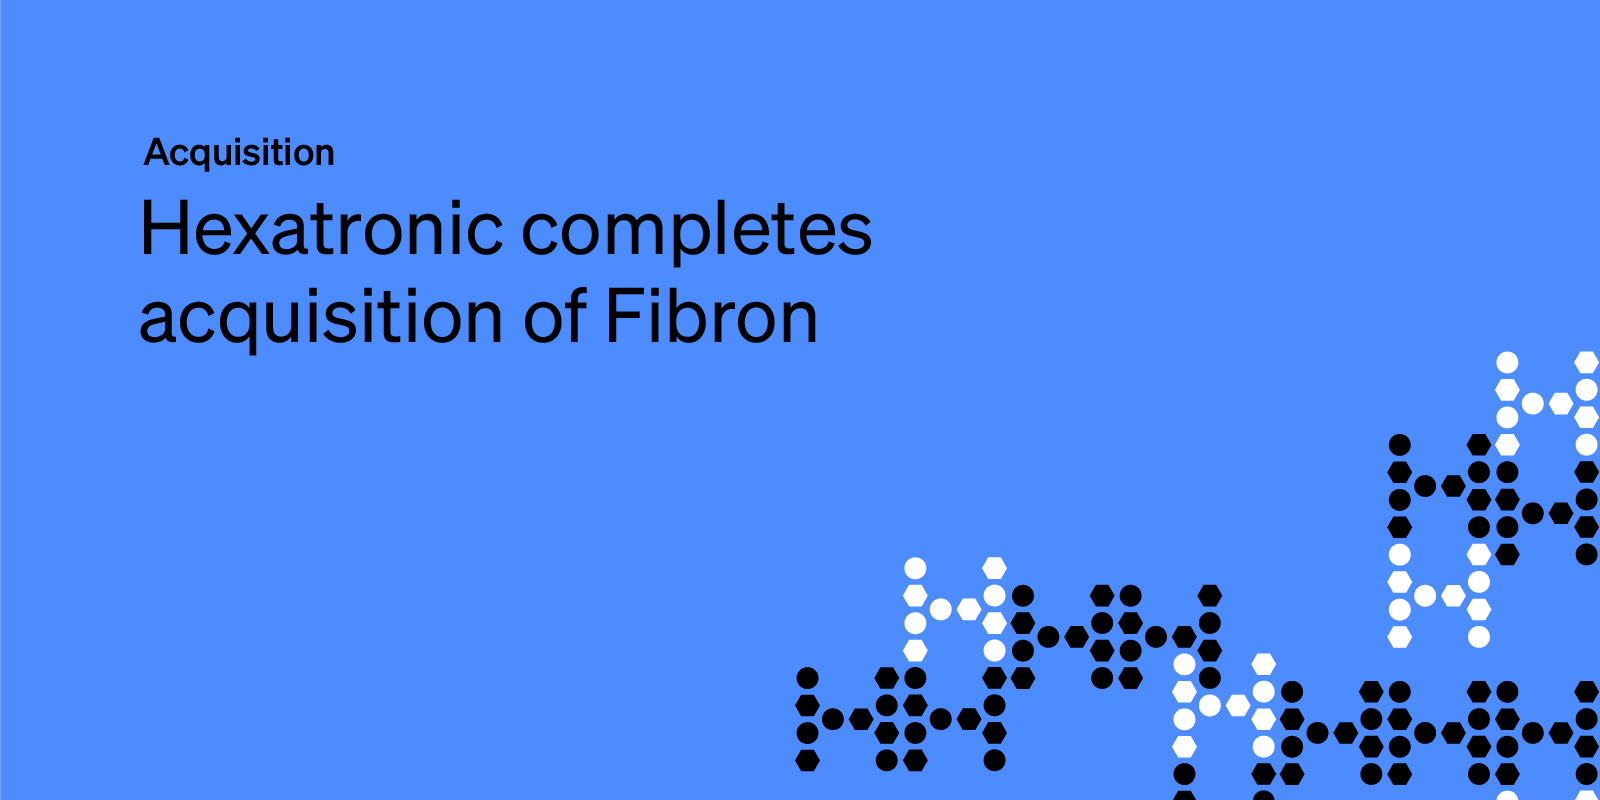 Hexatronic completes acquisition of Fibron